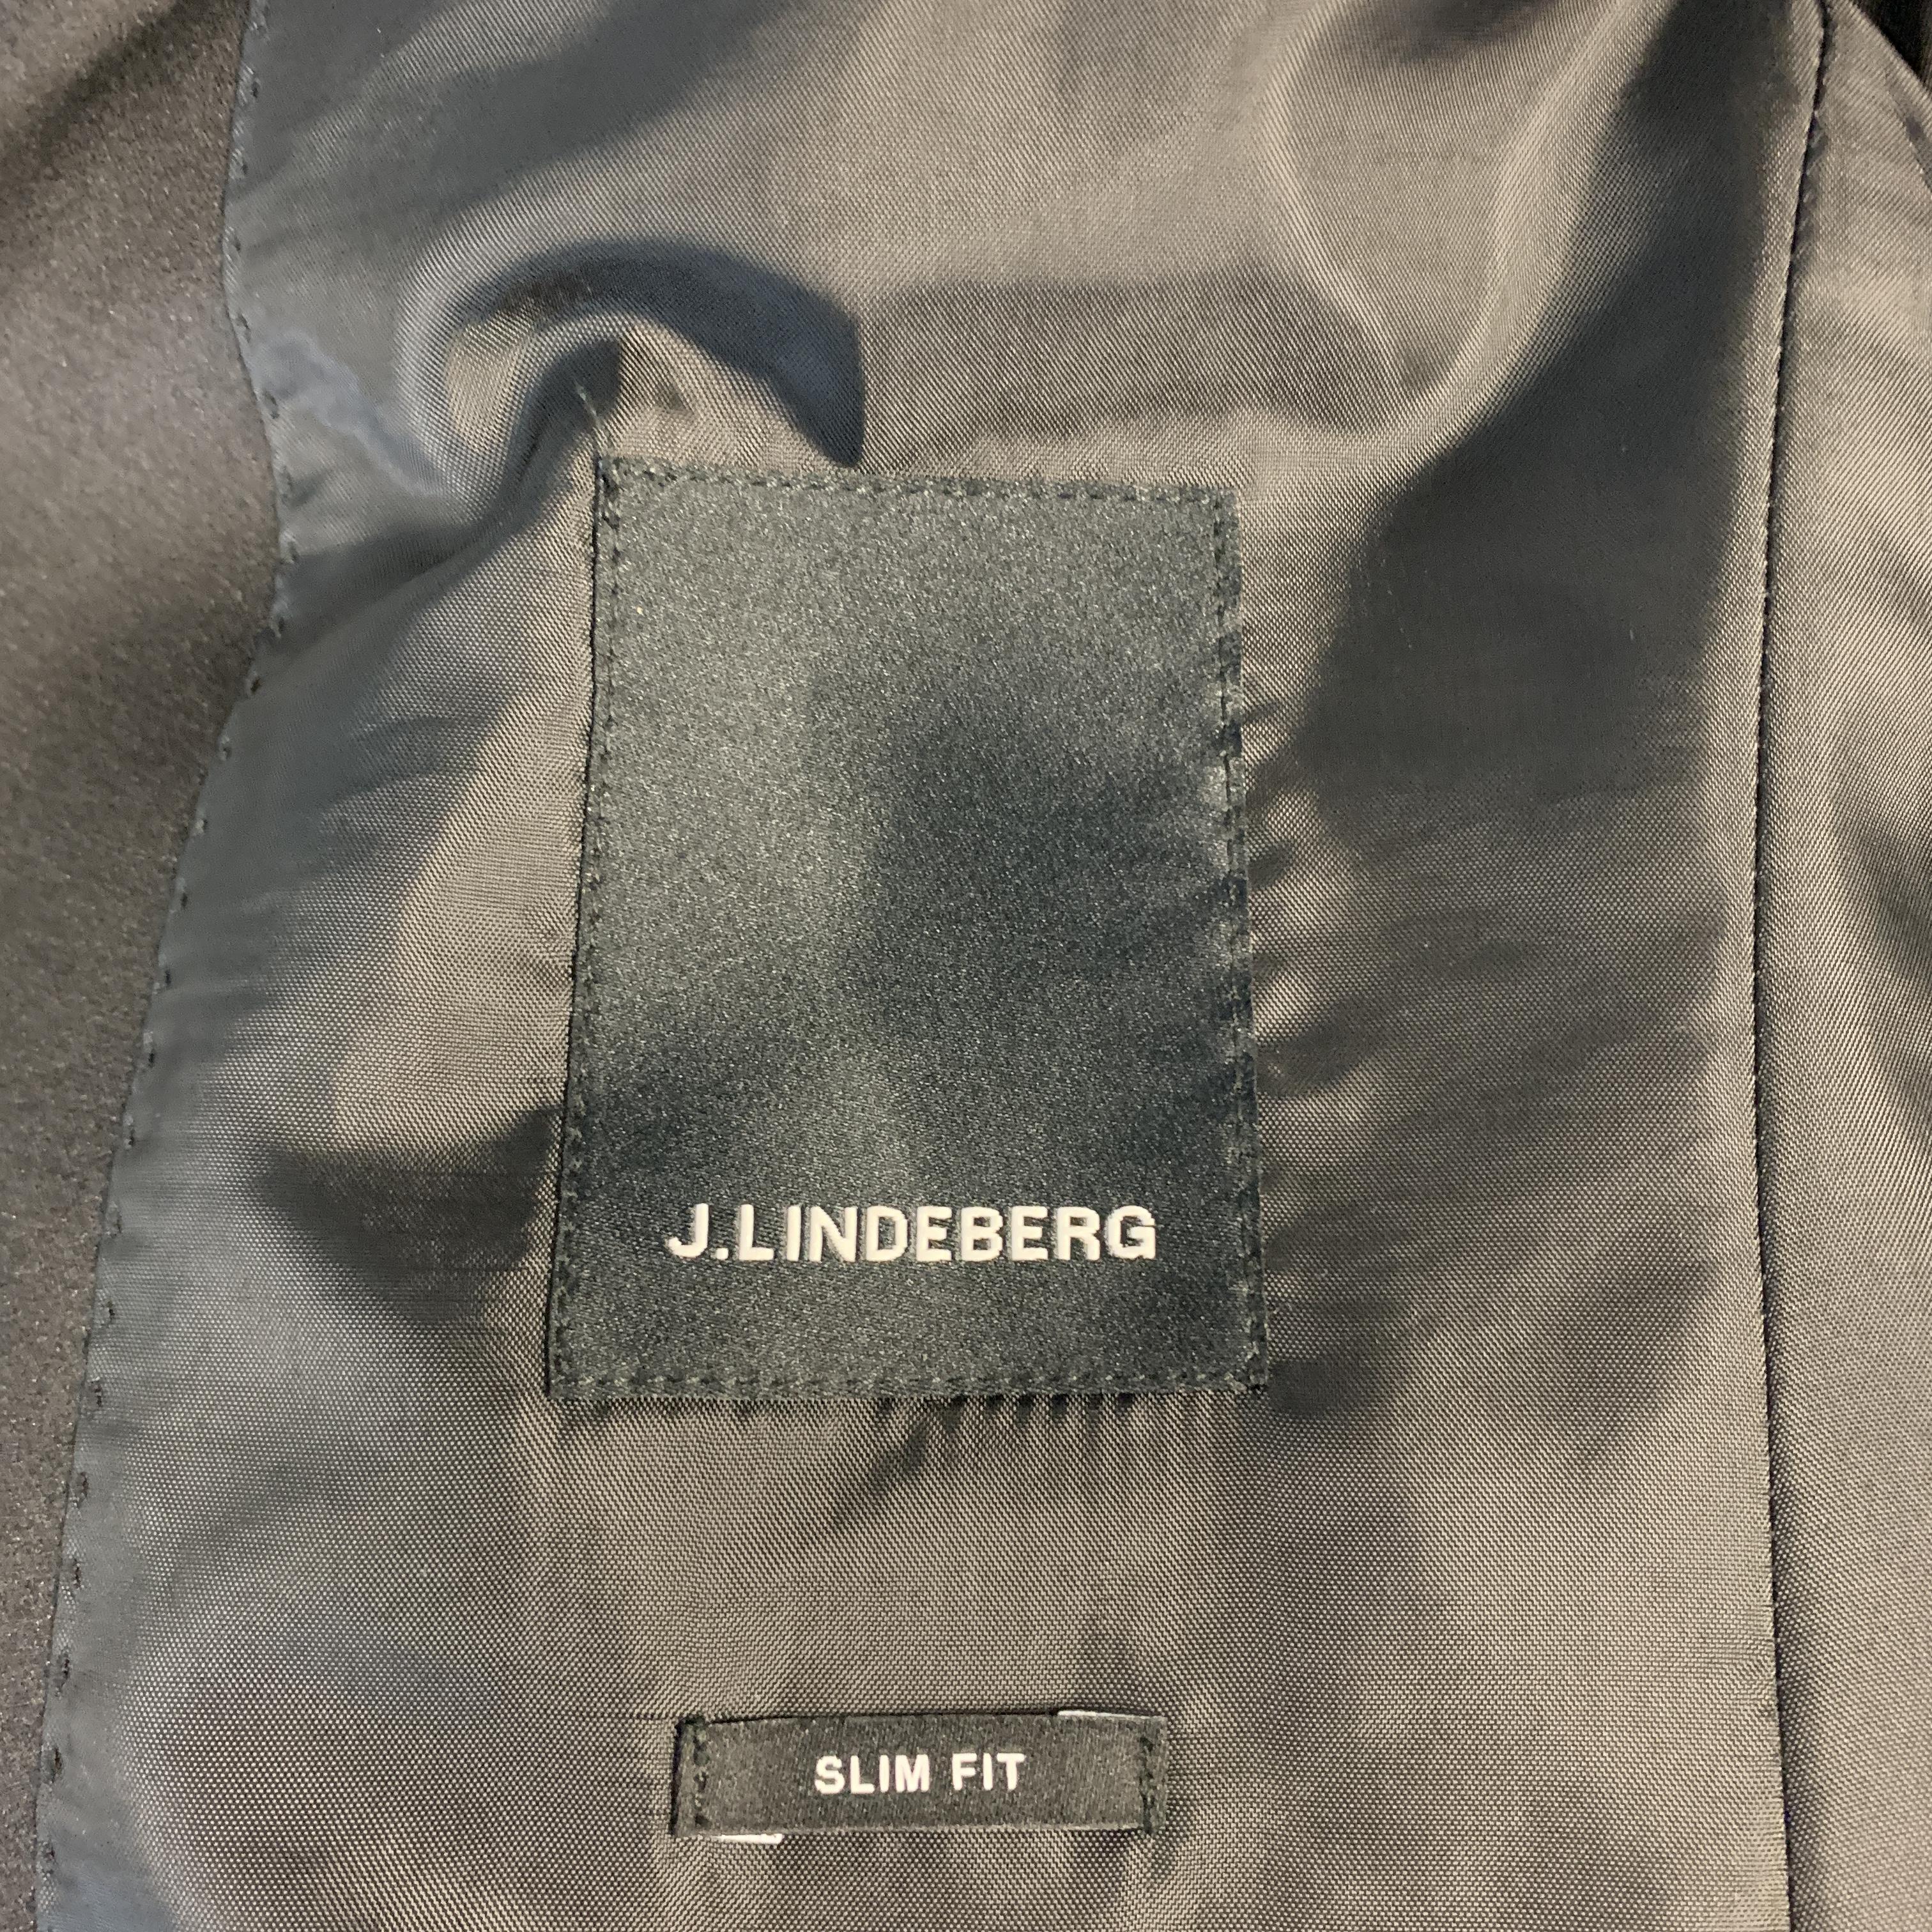 J. LINDEBERG Size 36 Black Woven Cotton Blend Peak Lapel Sport Coat 3